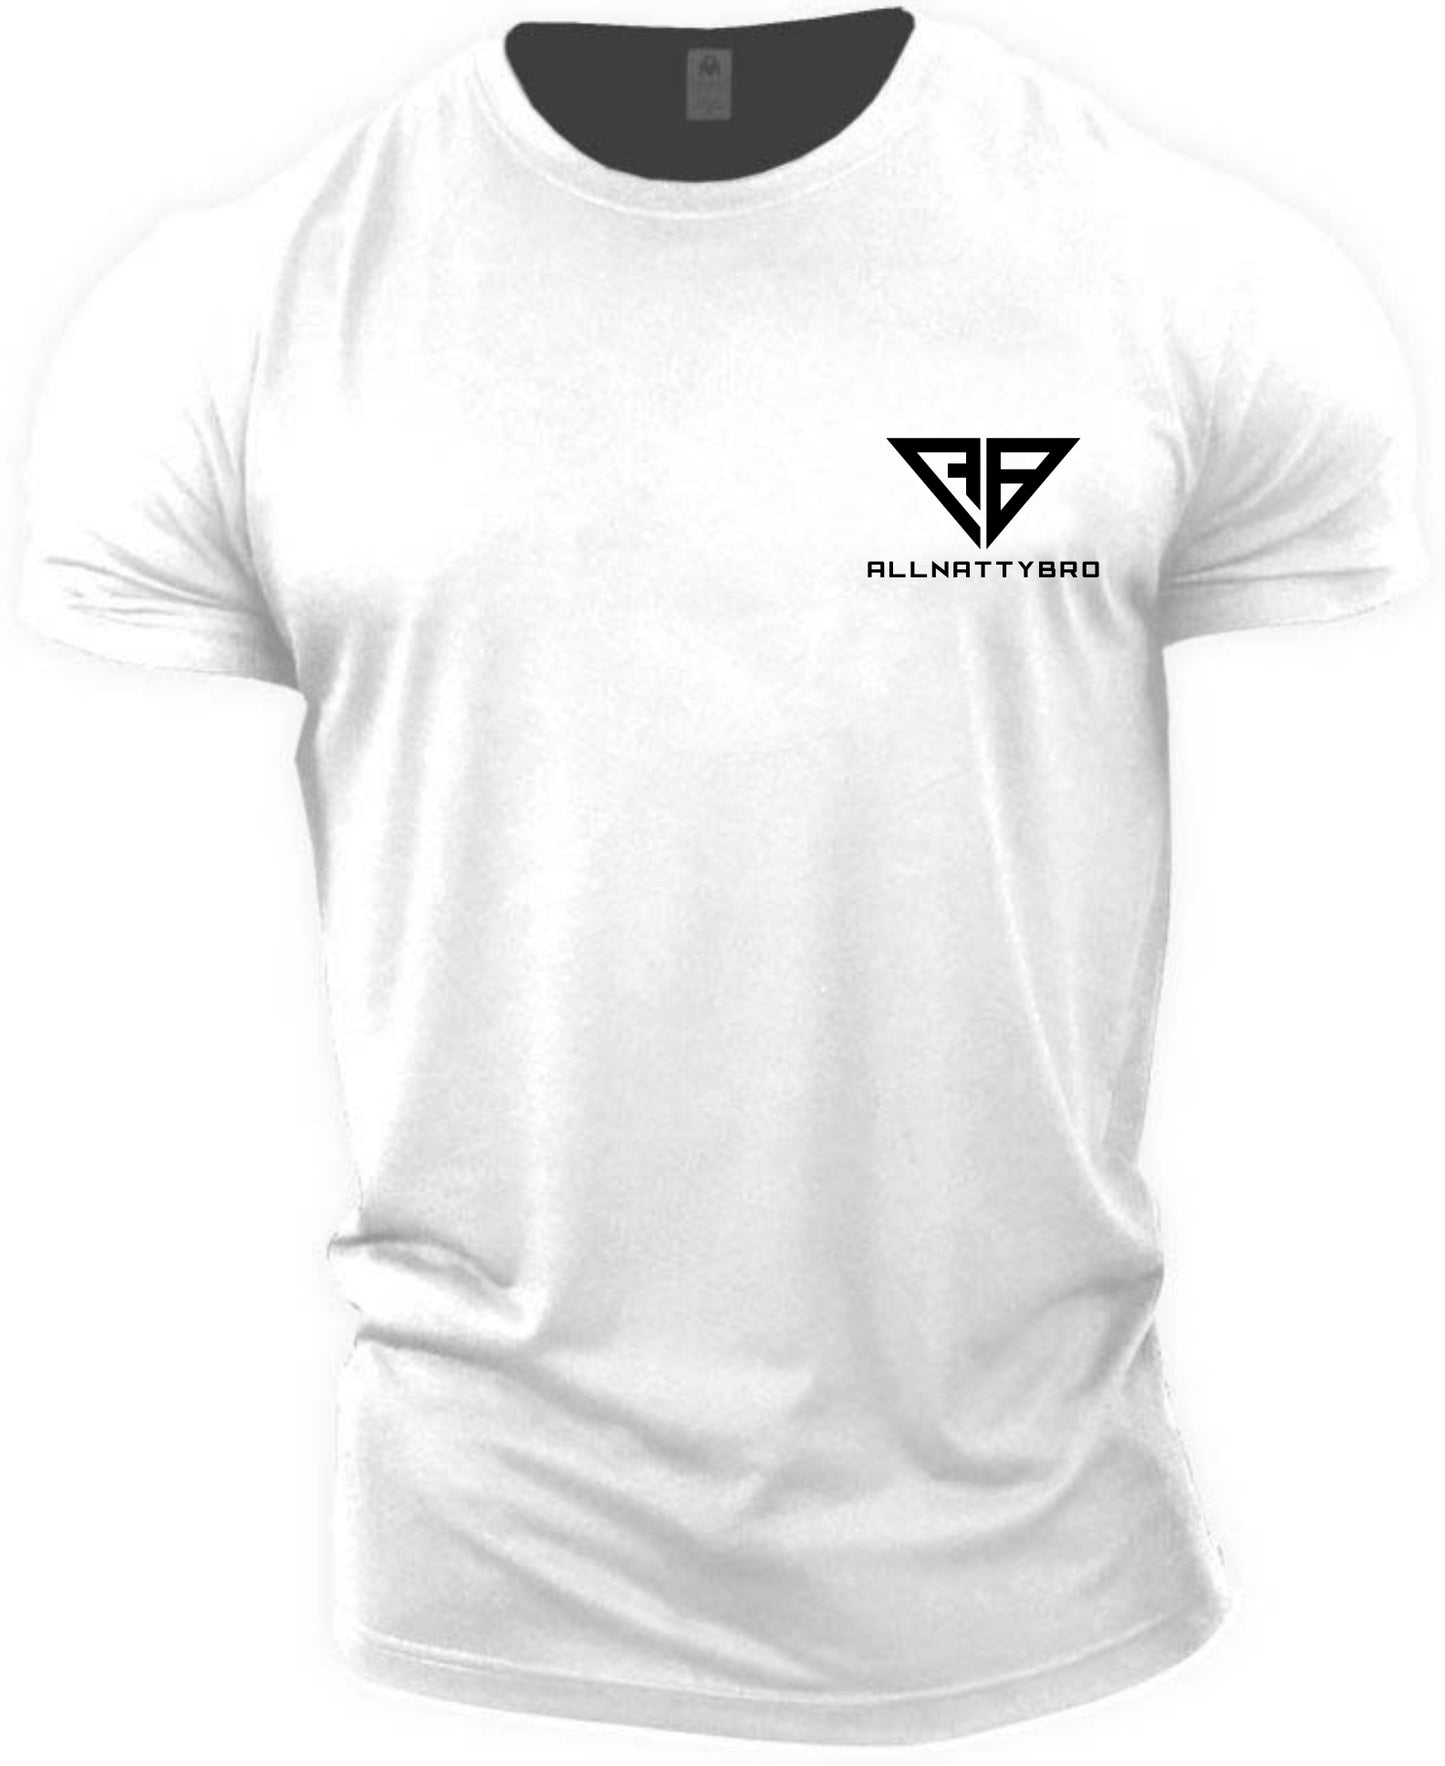 Gym T-shirt AllNattybro